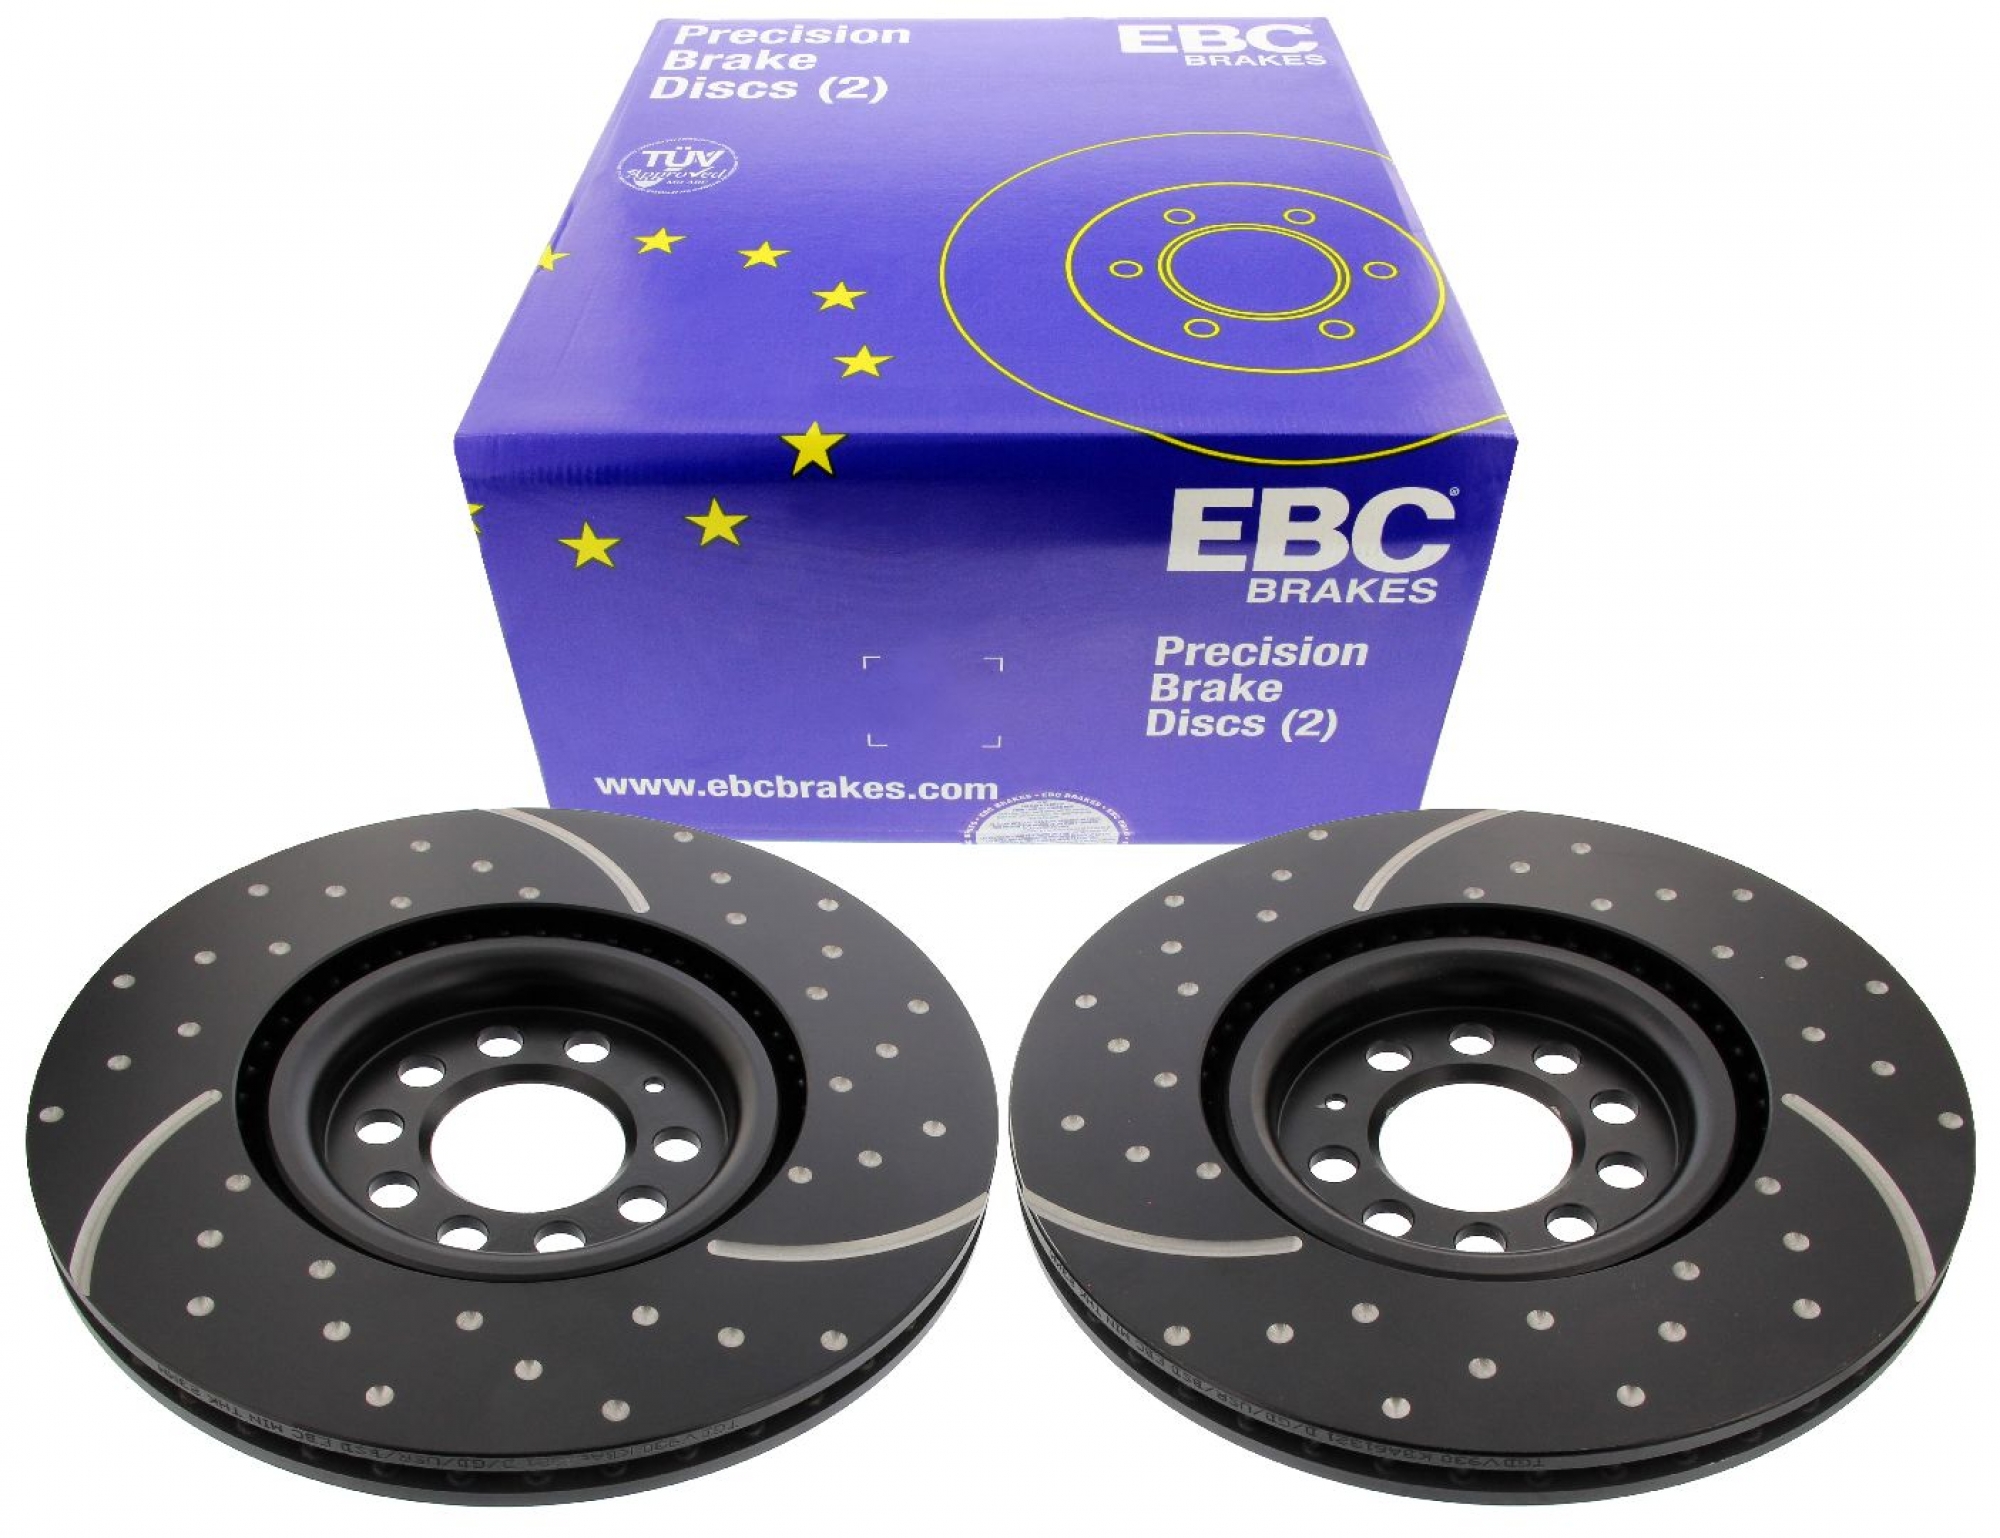 EBC-Bremsscheiben, Turbo Groove Disc Black (2-teilig), VA, VW Golf 4 Jubi, Ø 312 mm